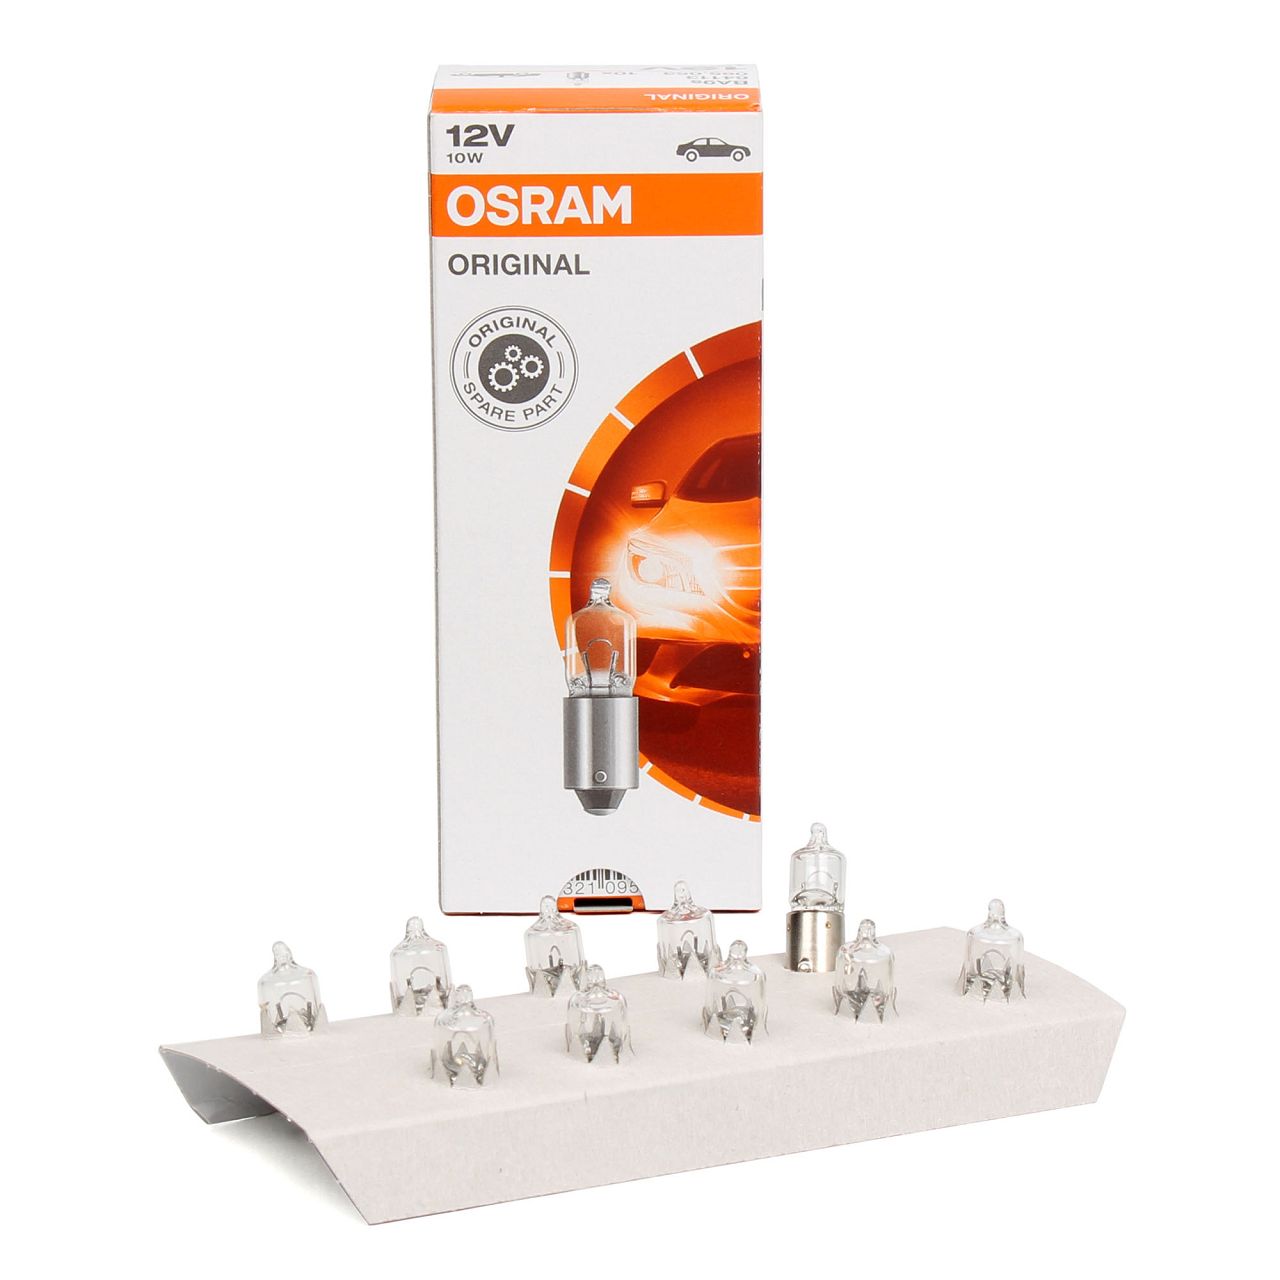 10x OSRAM Halogenlampe Glühlampe Sockelglühlampe ORIGINAL 12V 10W BA9s 64113